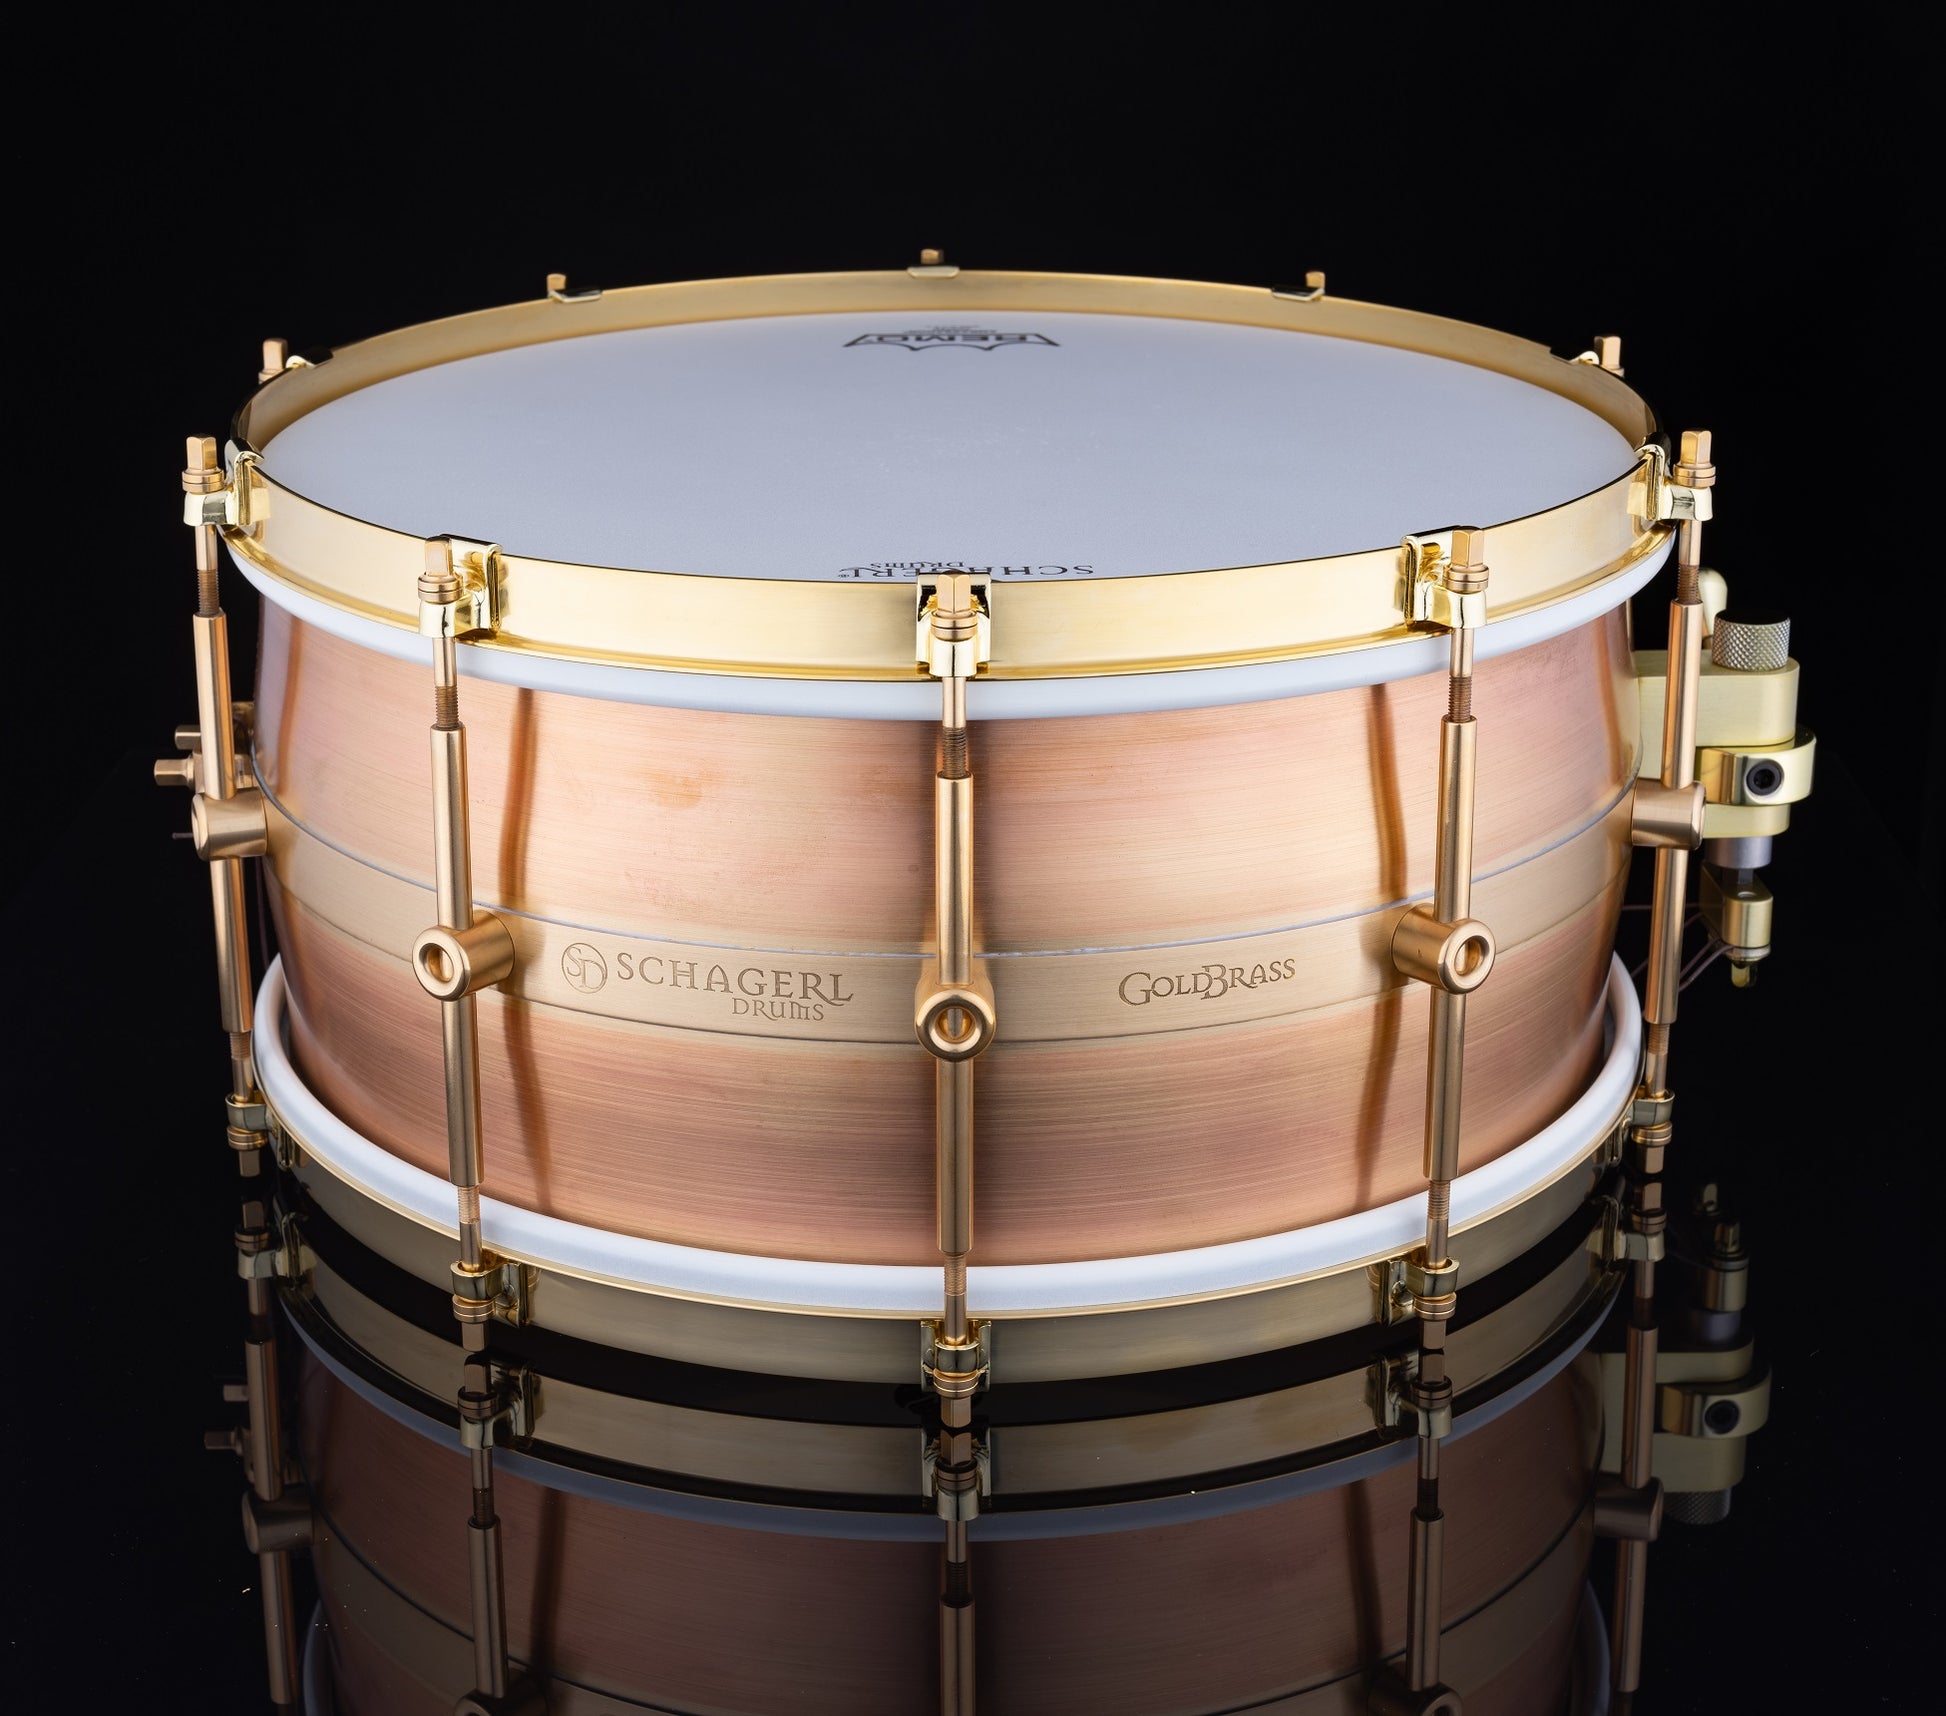 Schagerl GoldBrass 14" x 6.5" Raw Copper/Brass Snare Drum